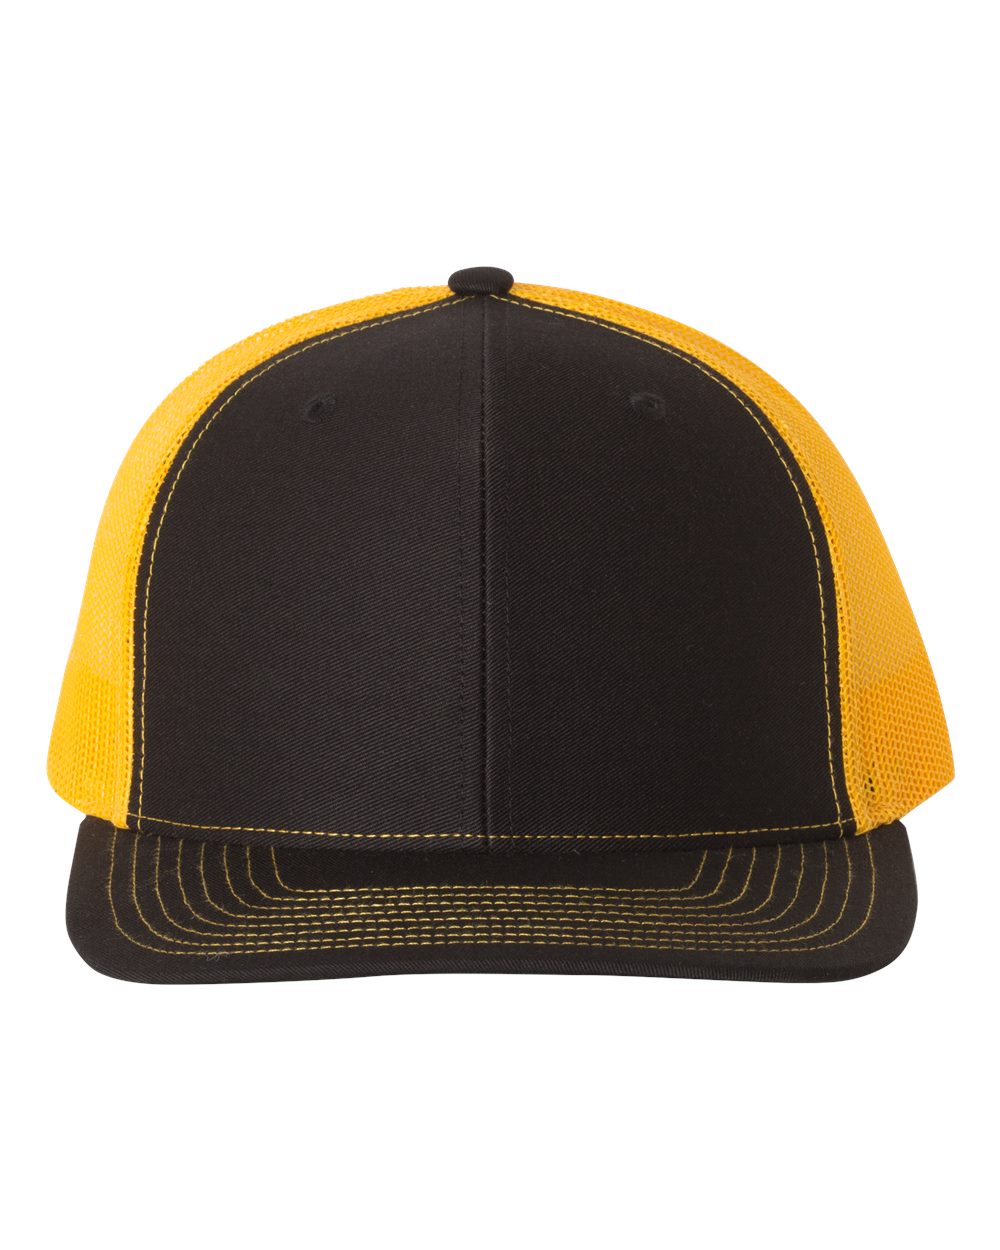 Richardson Snapback Trucker Hat (112) in Black/Gold